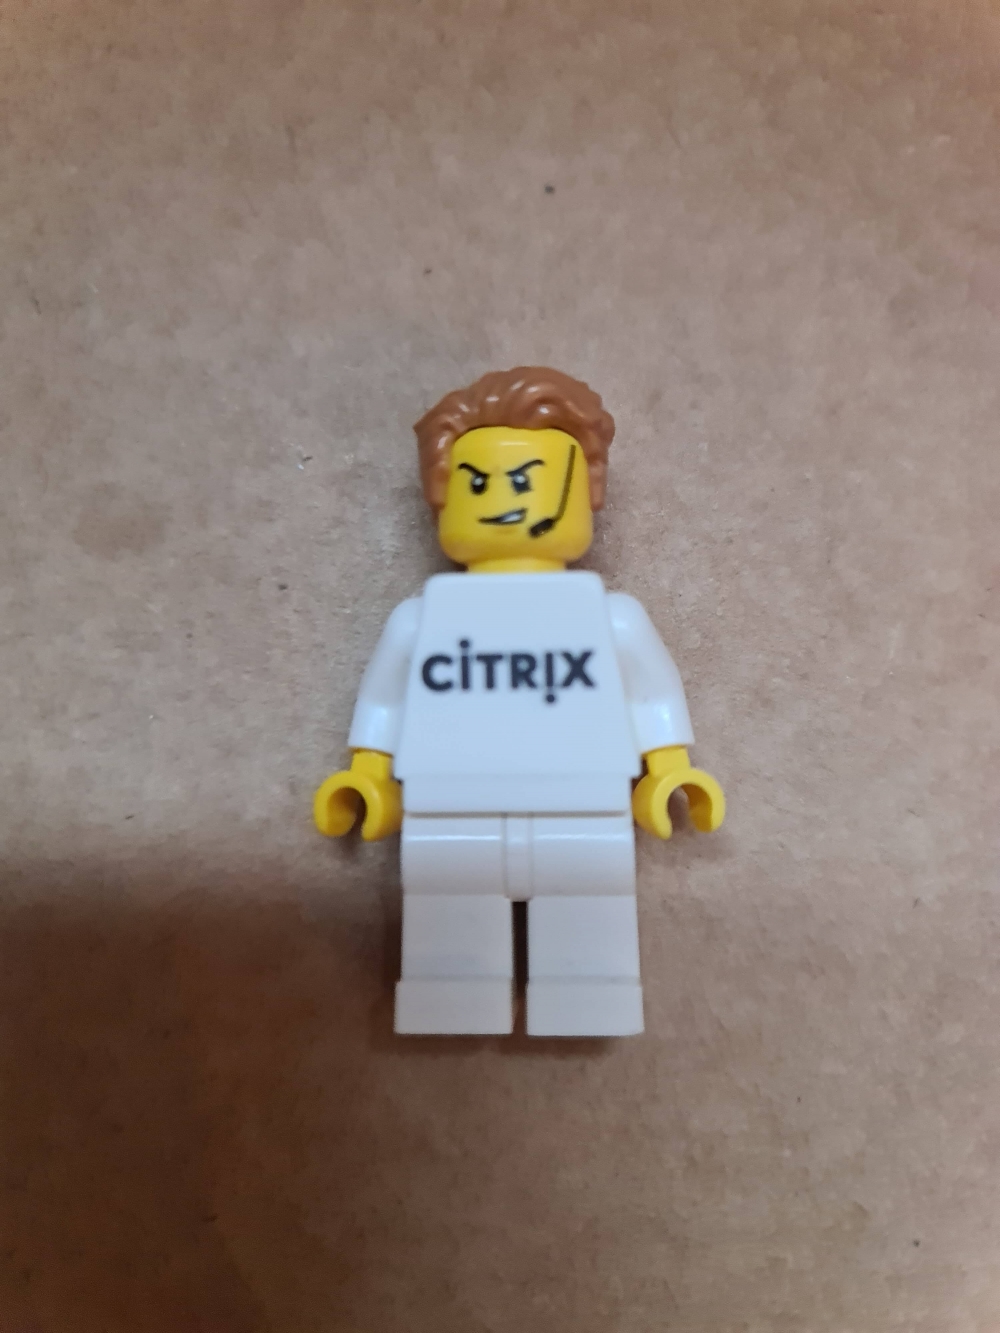 Kul promotinal Citrix minifigure. 
Sjelden figur. Gitt til Citrix ansatte ved Citrix Synergy 2016 i Las Vegas.
Perfekt stand.